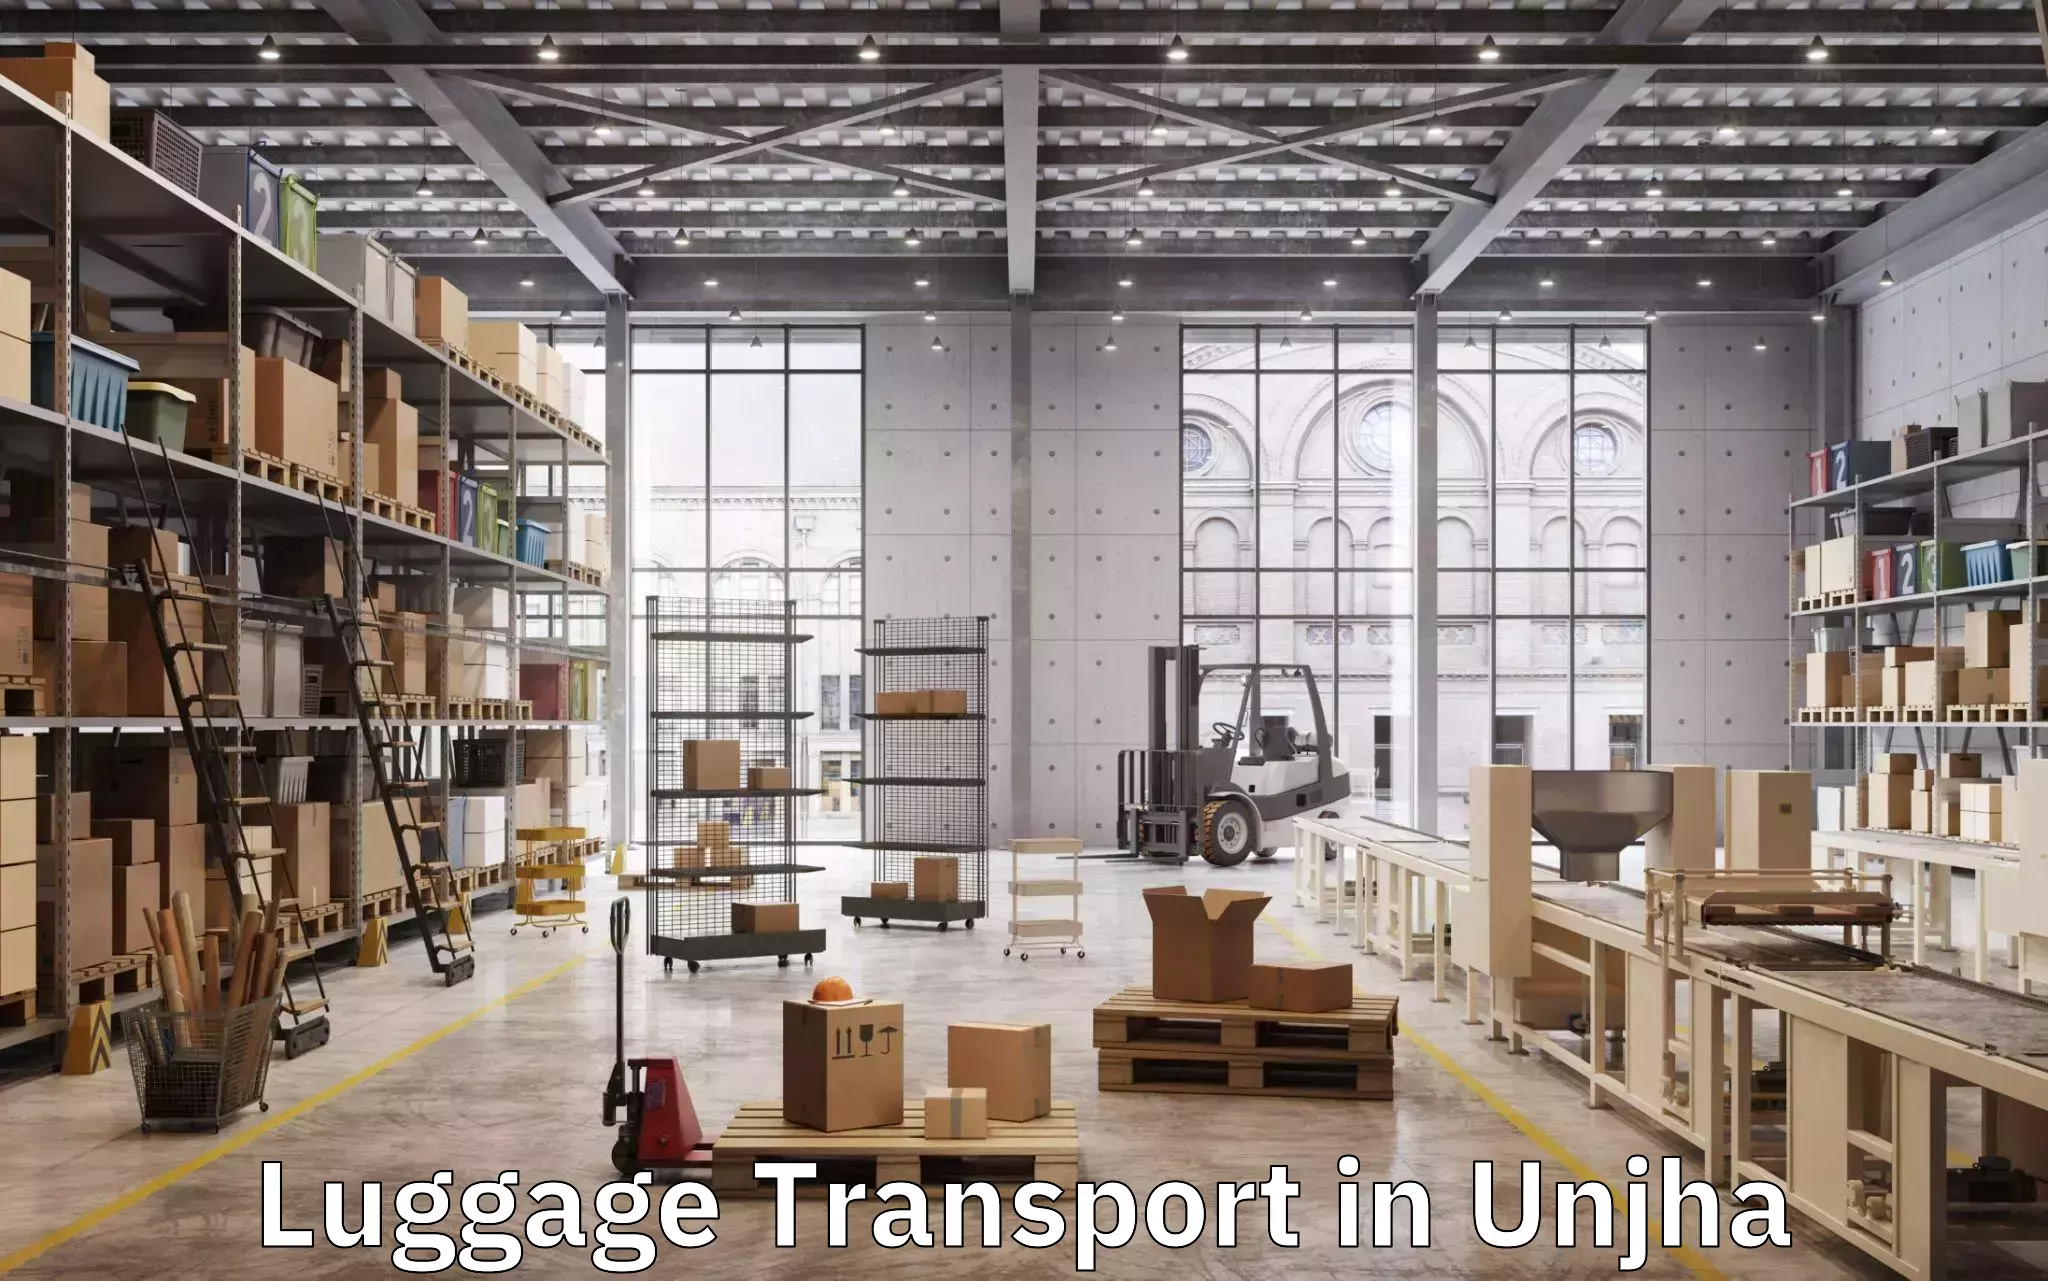 Luggage transport service in Unjha